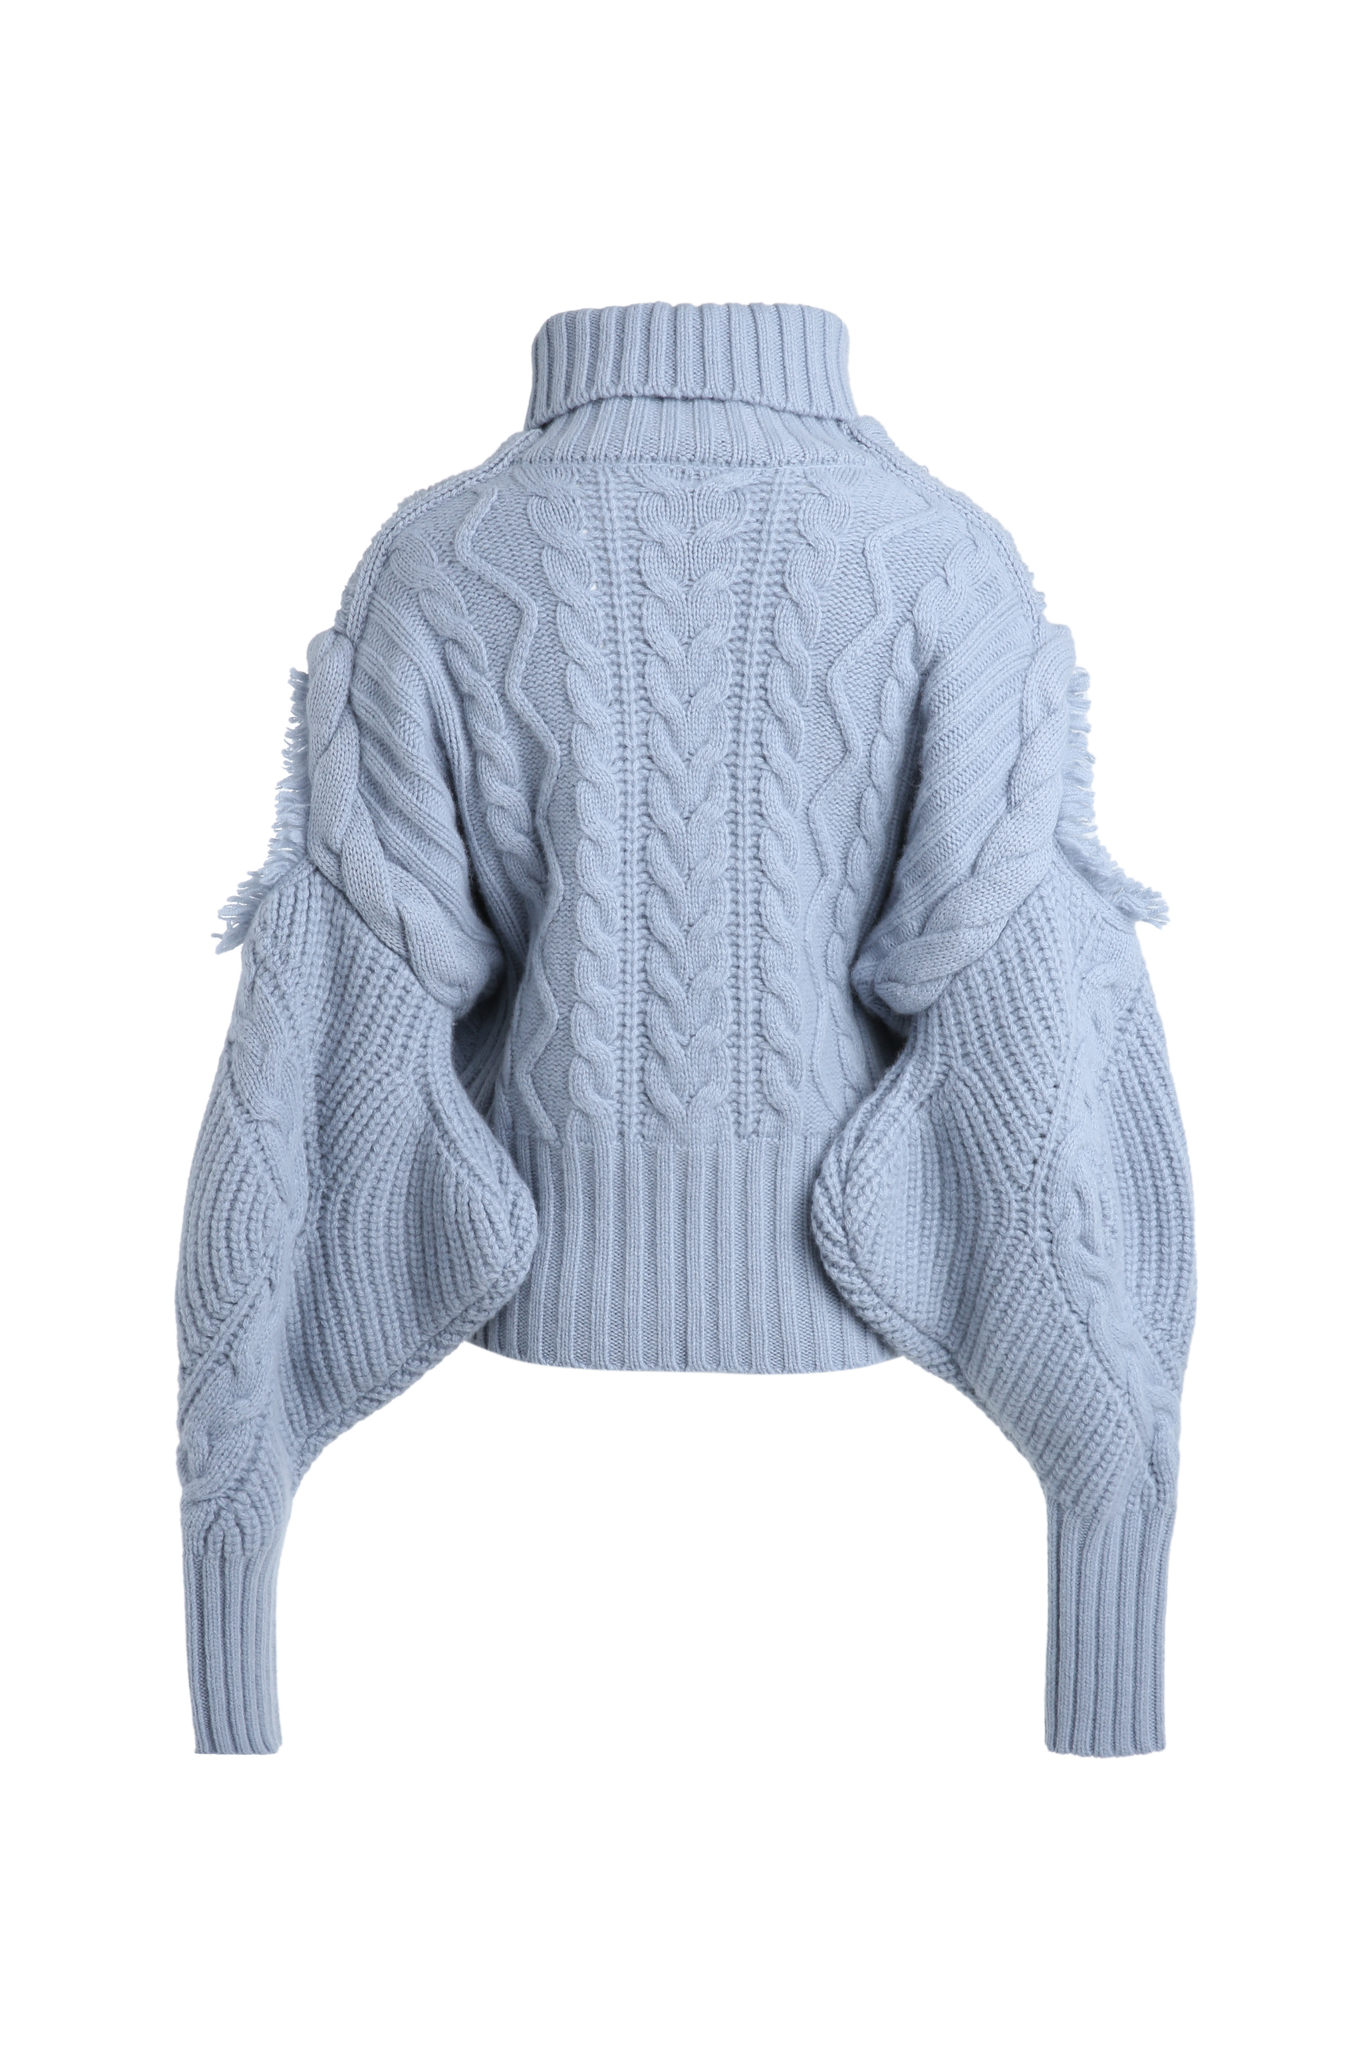 Turtleneck Knit Sweater